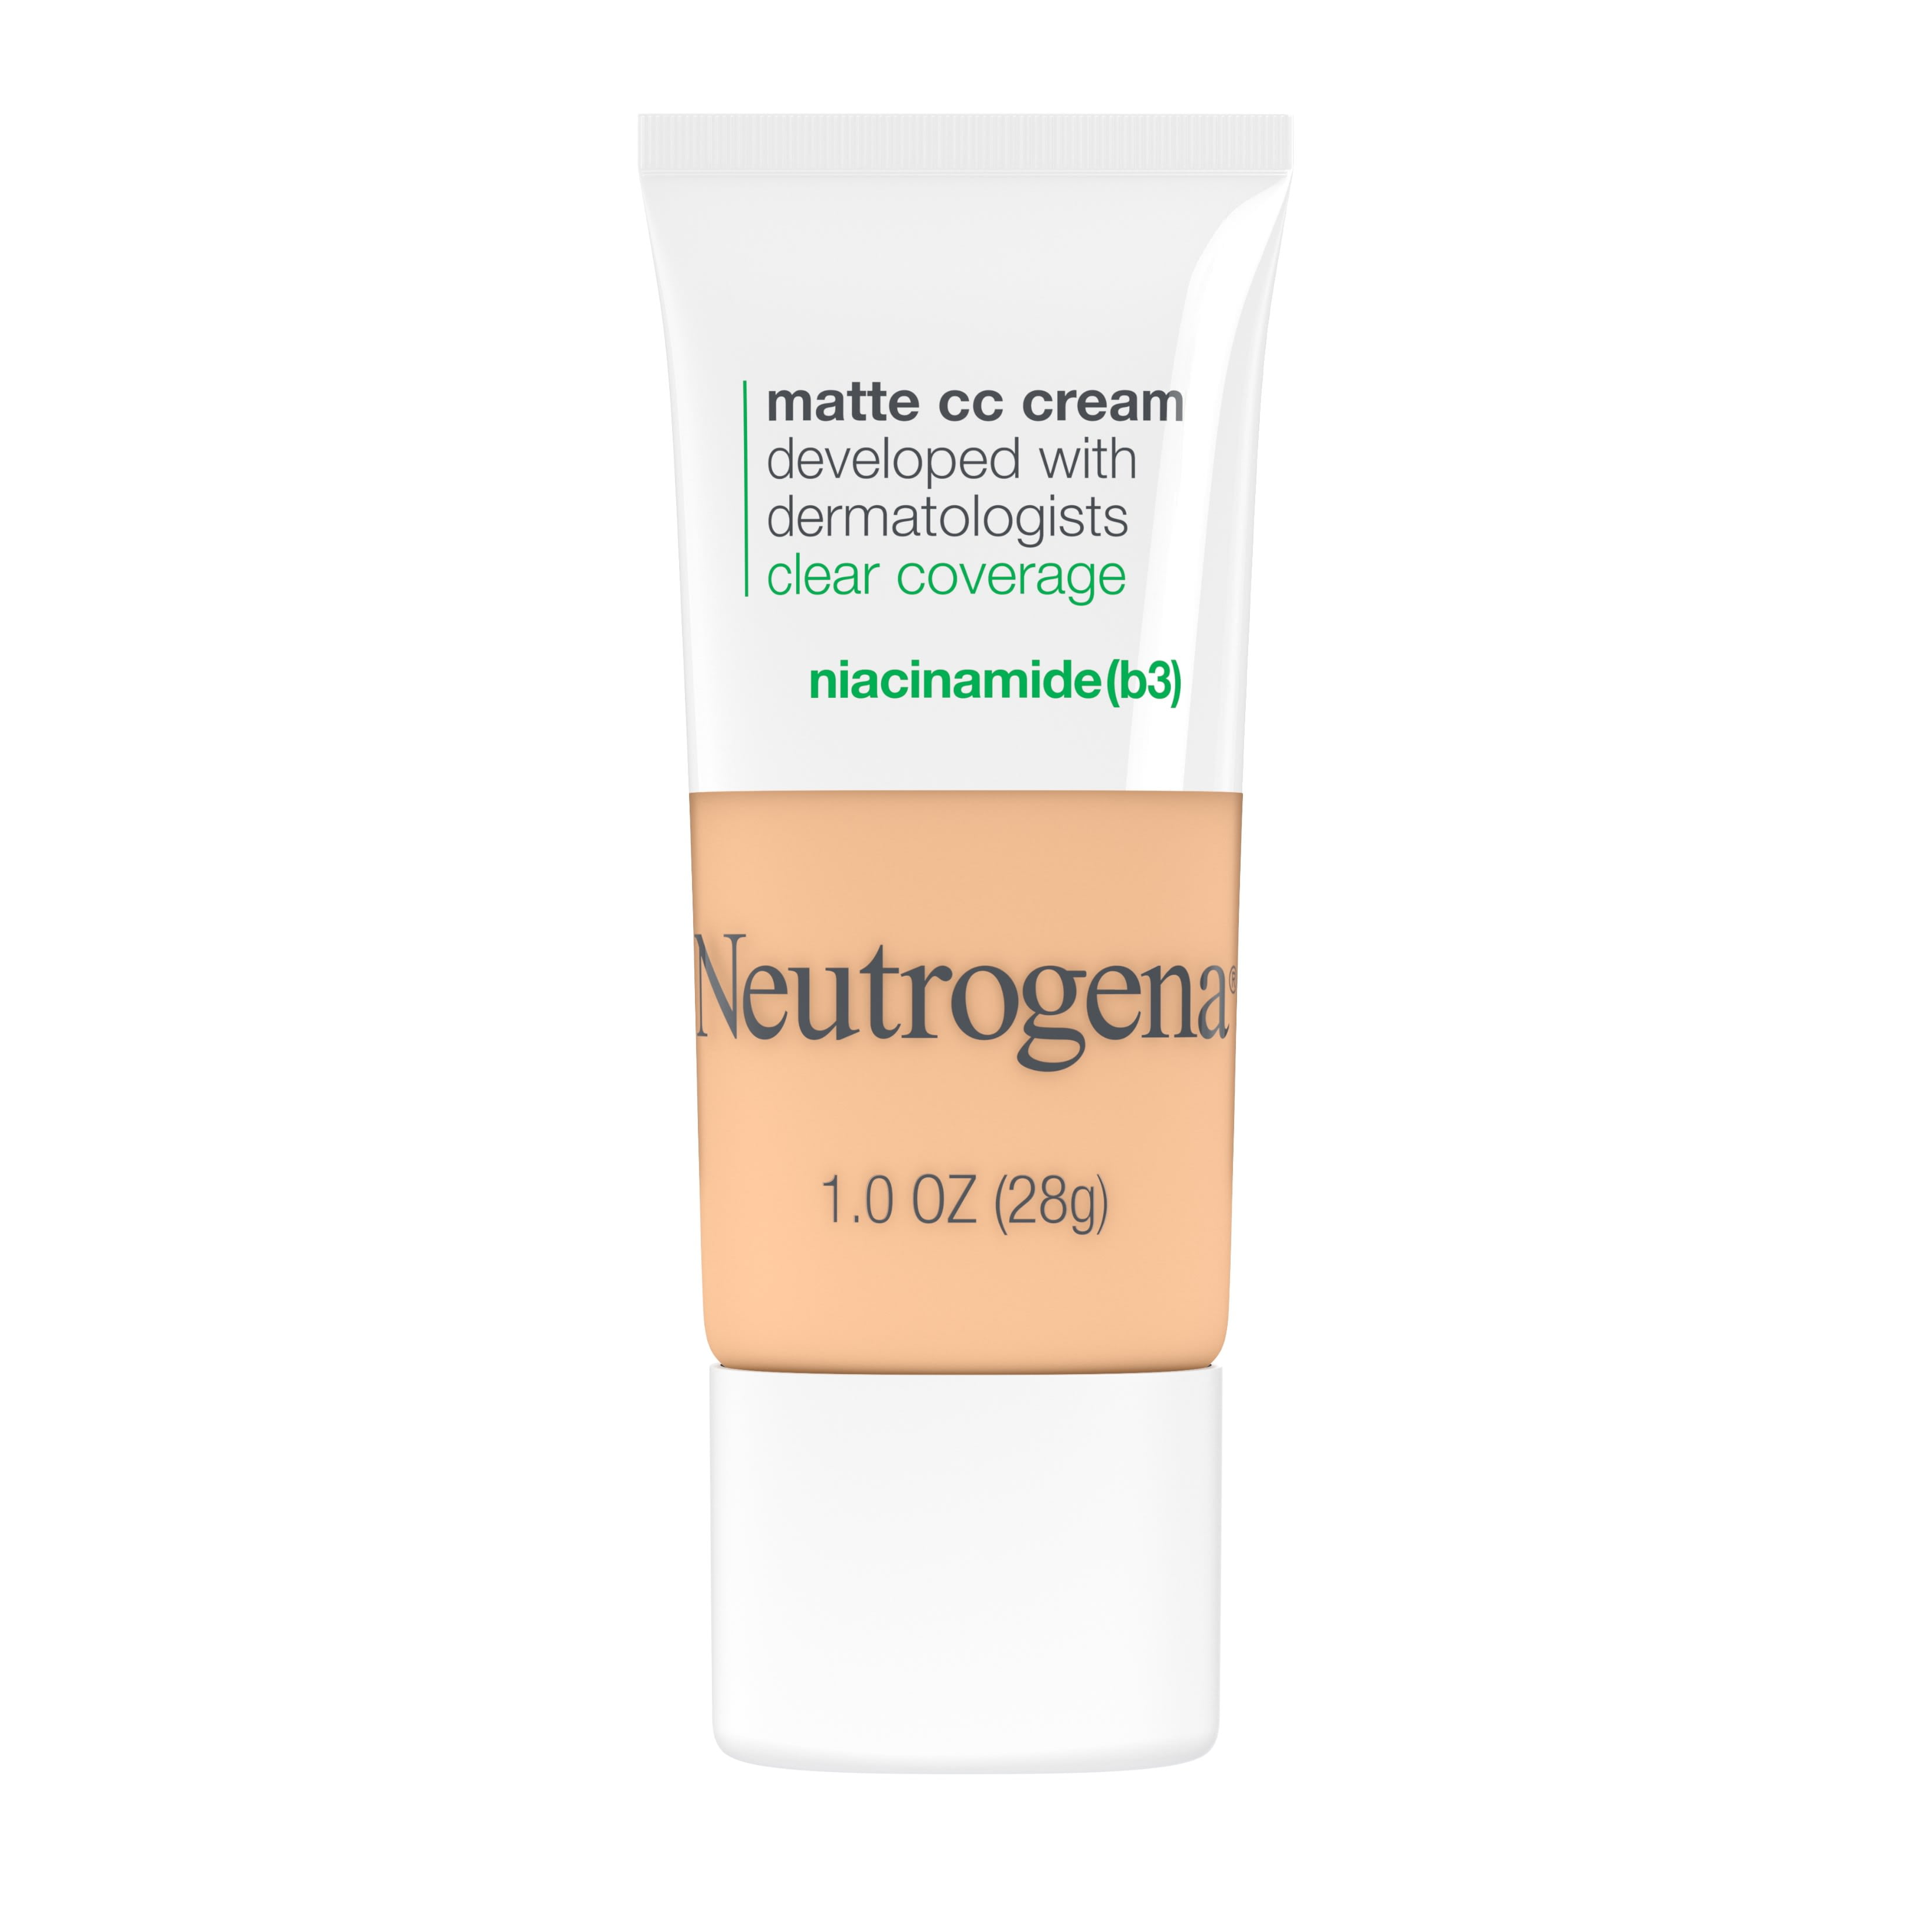 Neutrogena Clear Coverage Flawless Matte CC Cream, Porcelain, 1 oz